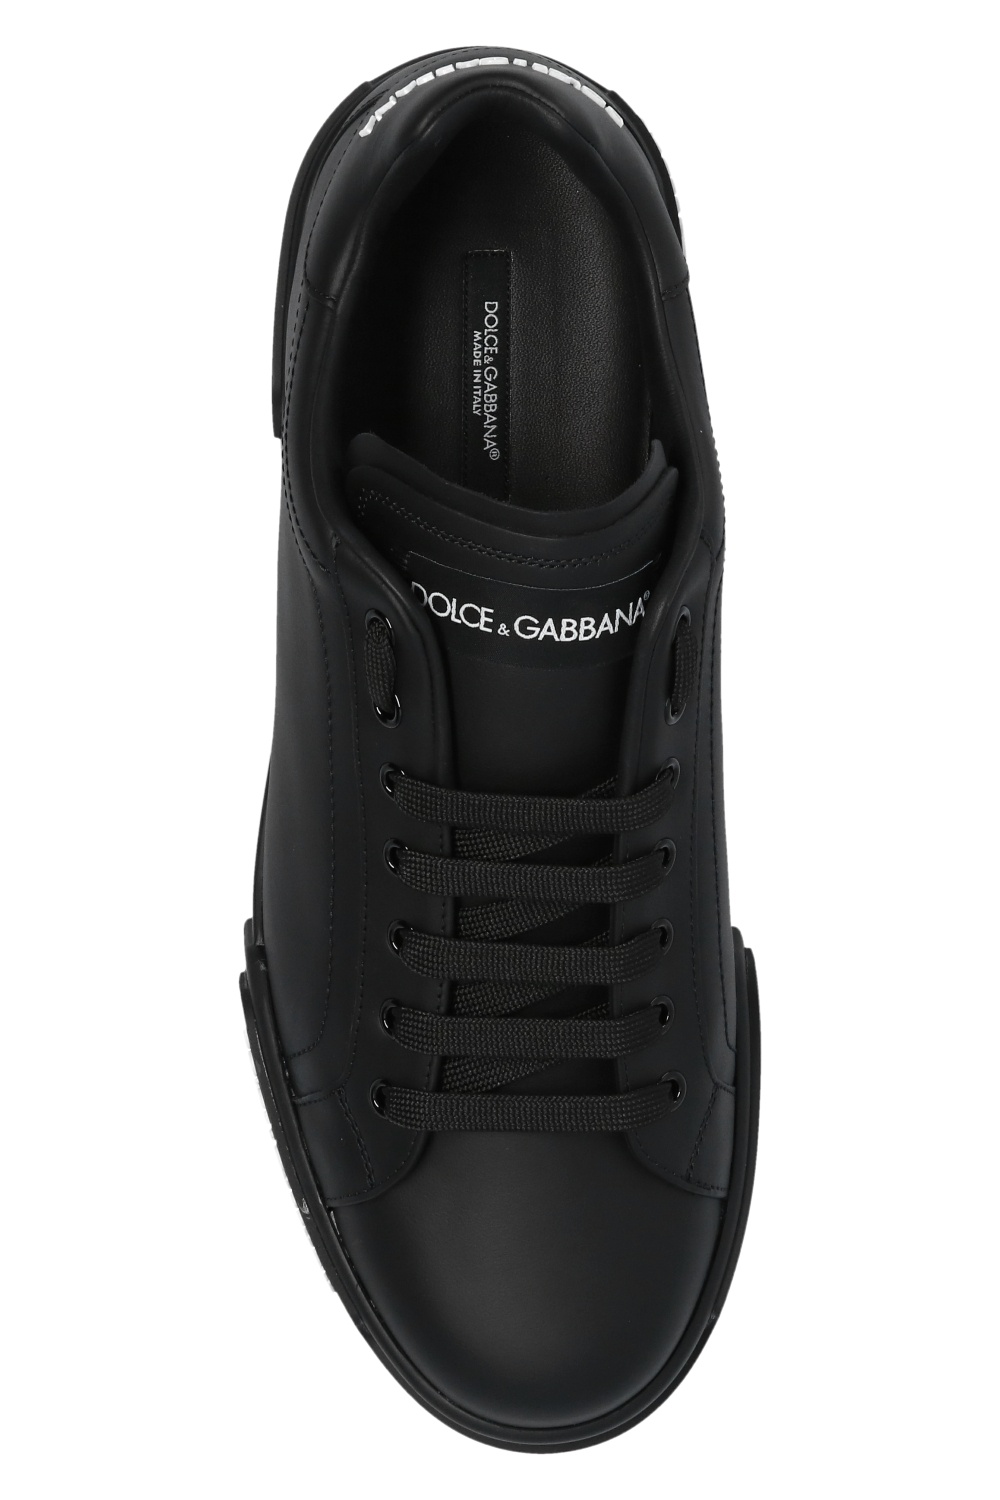 dolce earlier & Gabbana ‘Portofino’ sneakers